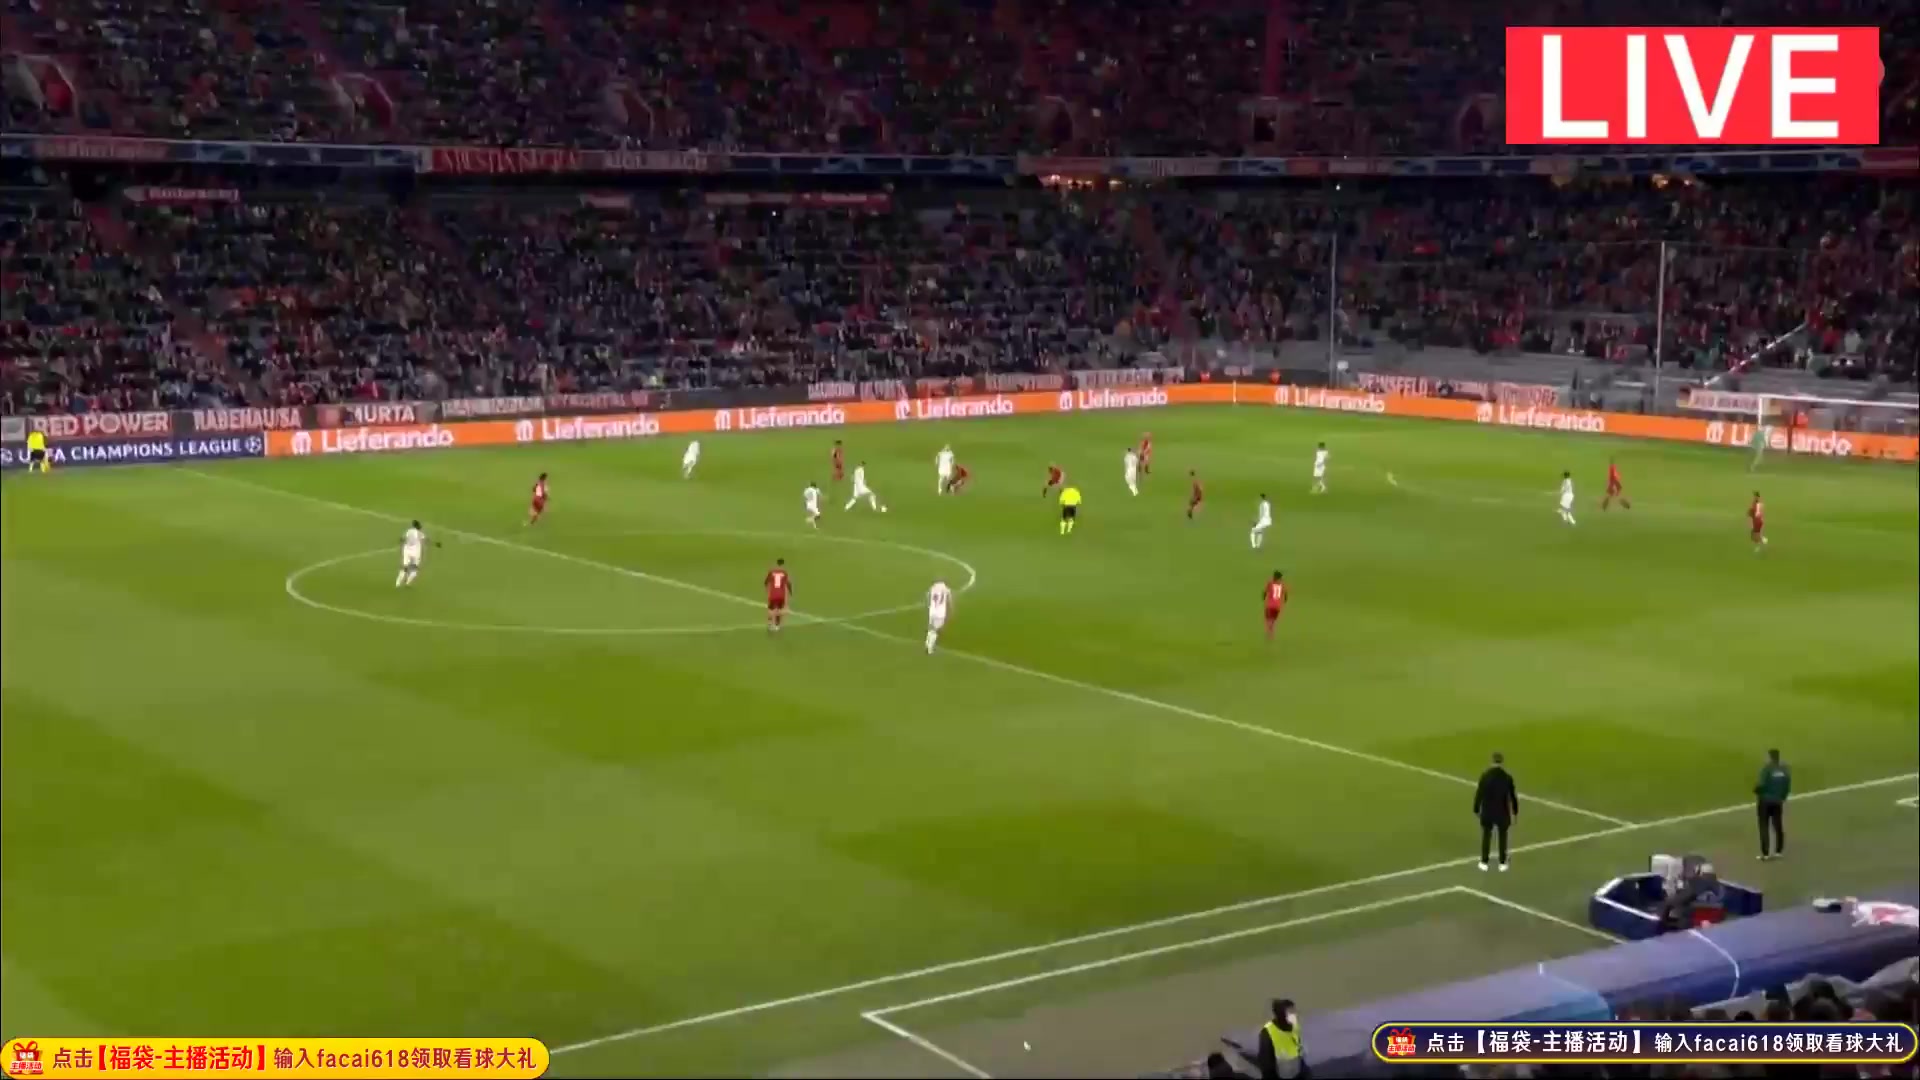 UEFA CL Bayern Munchen Vs Red Bull Salzburg Robert Lewandowski Goal in 22 min, Score 3:0